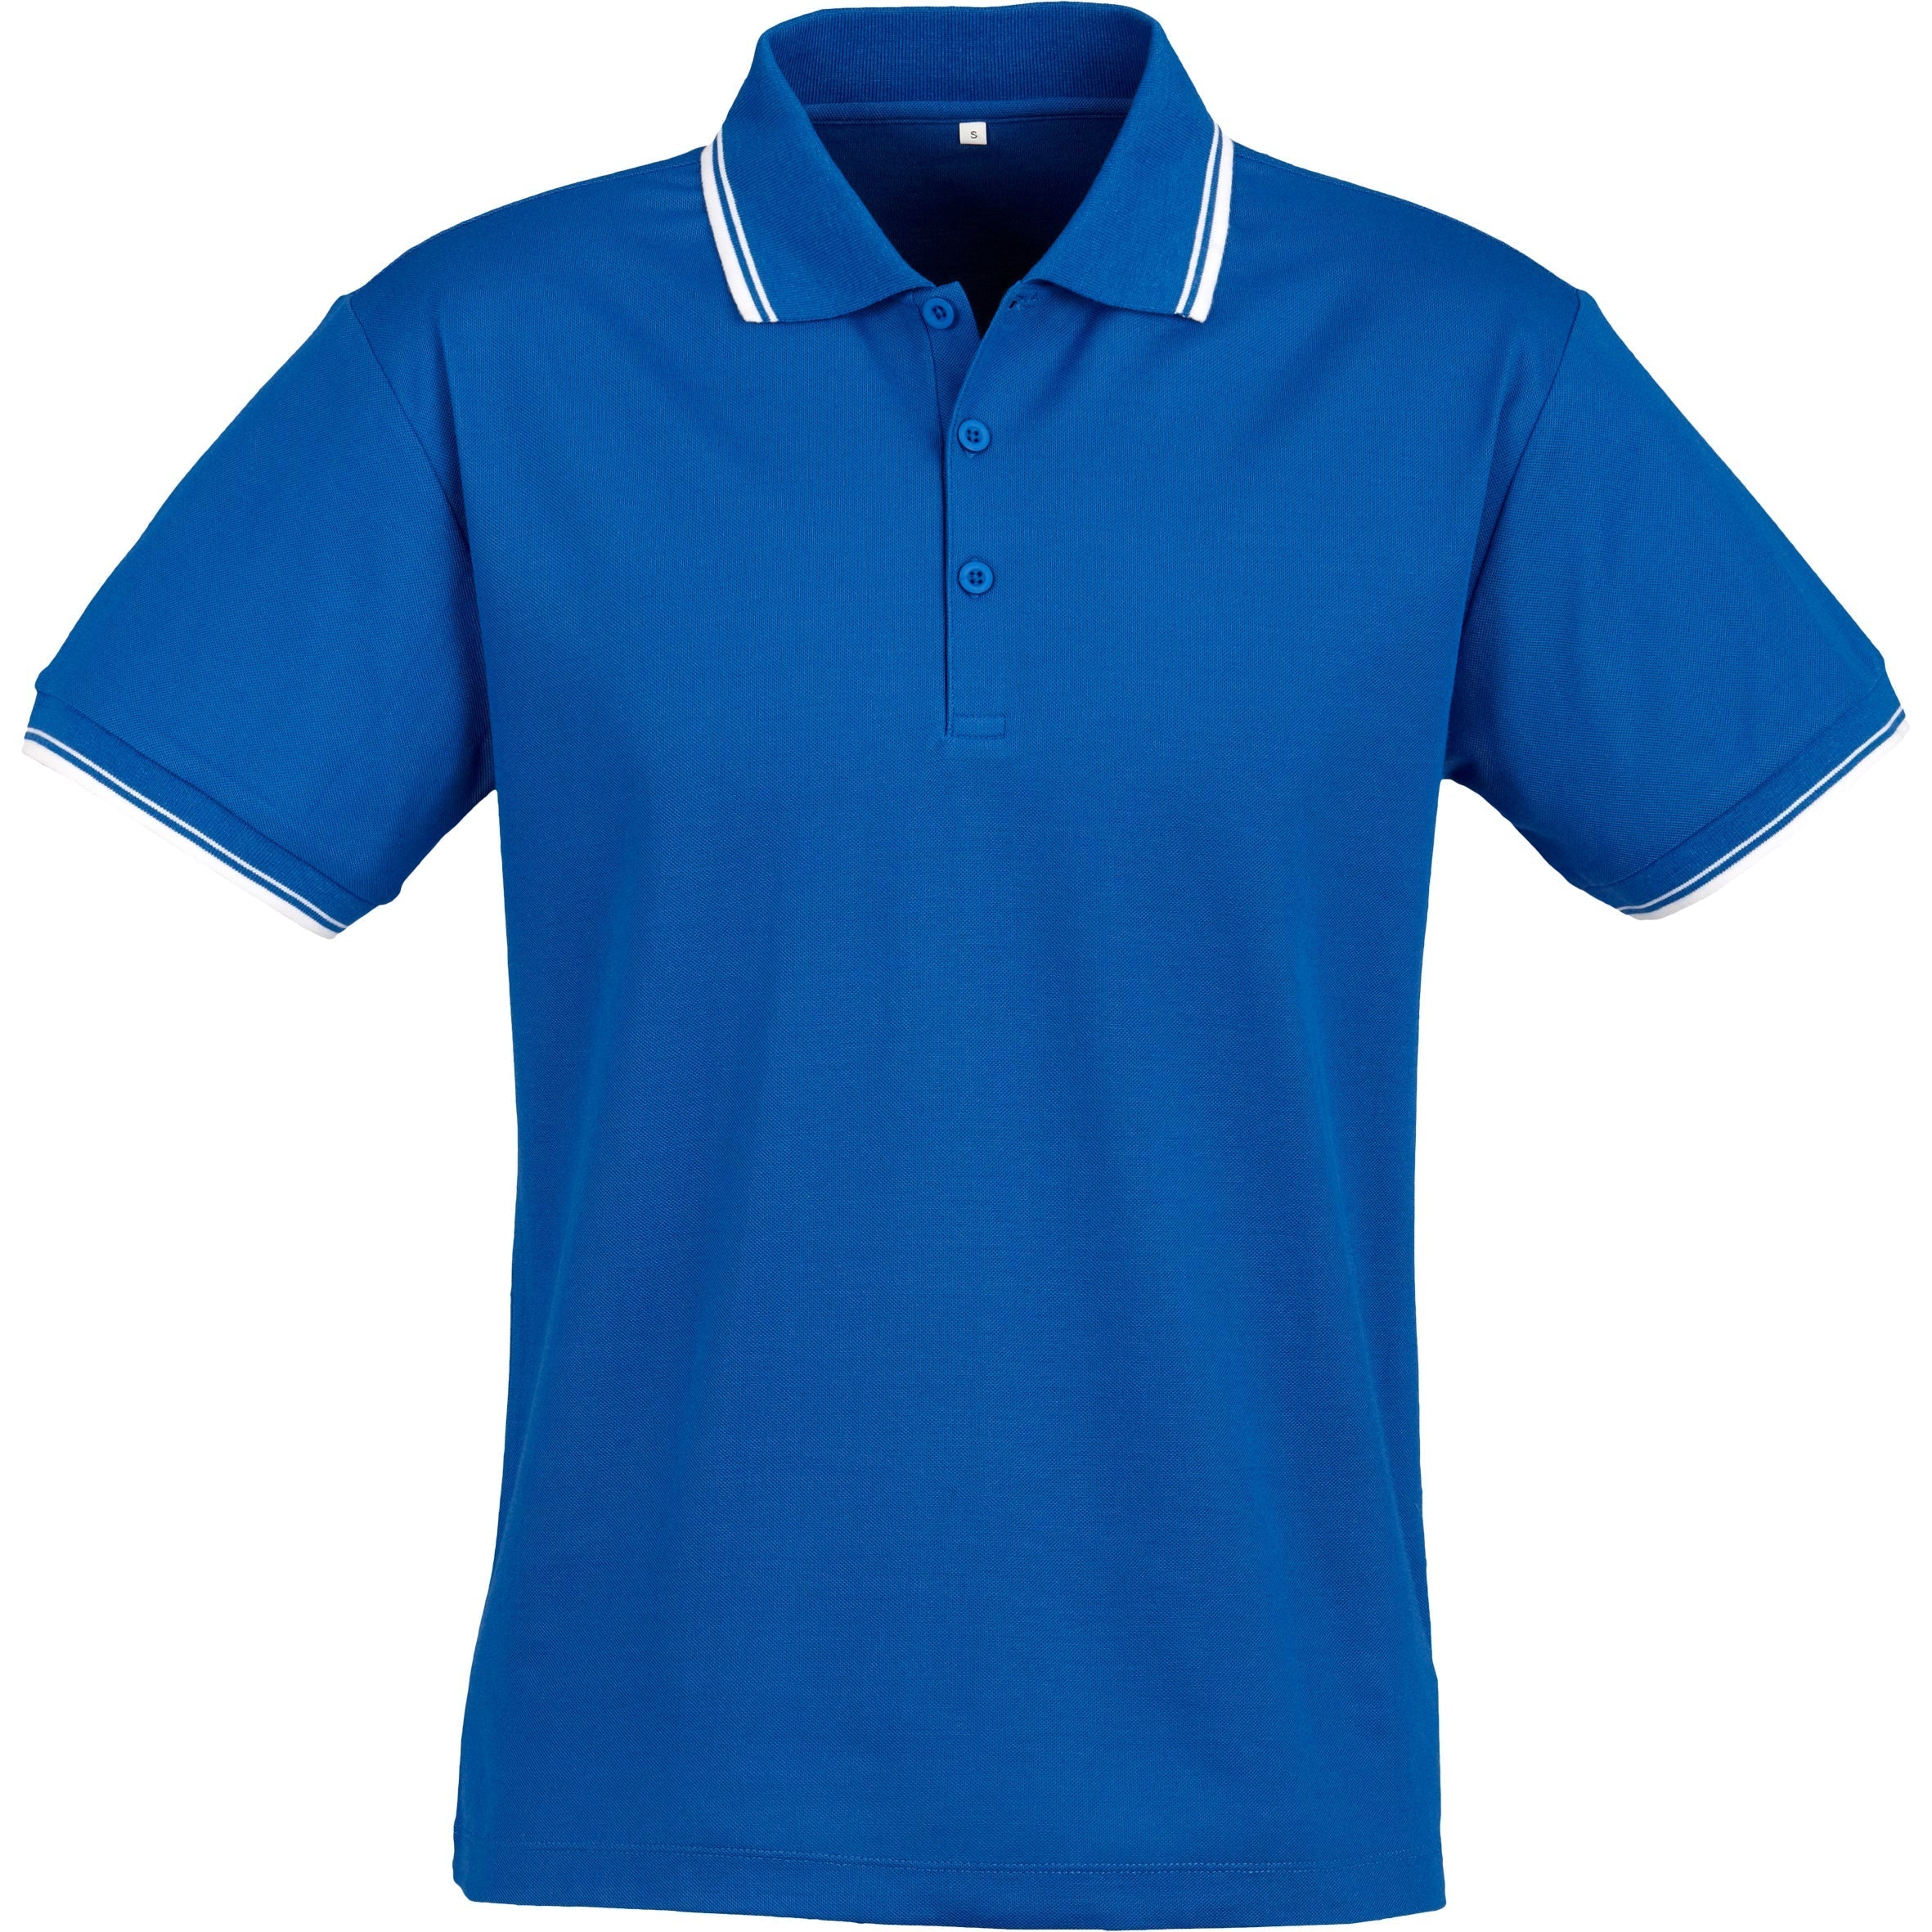 Mens Cambridge Golf Shirt - Black Red Only-L-Royal Blue-RB